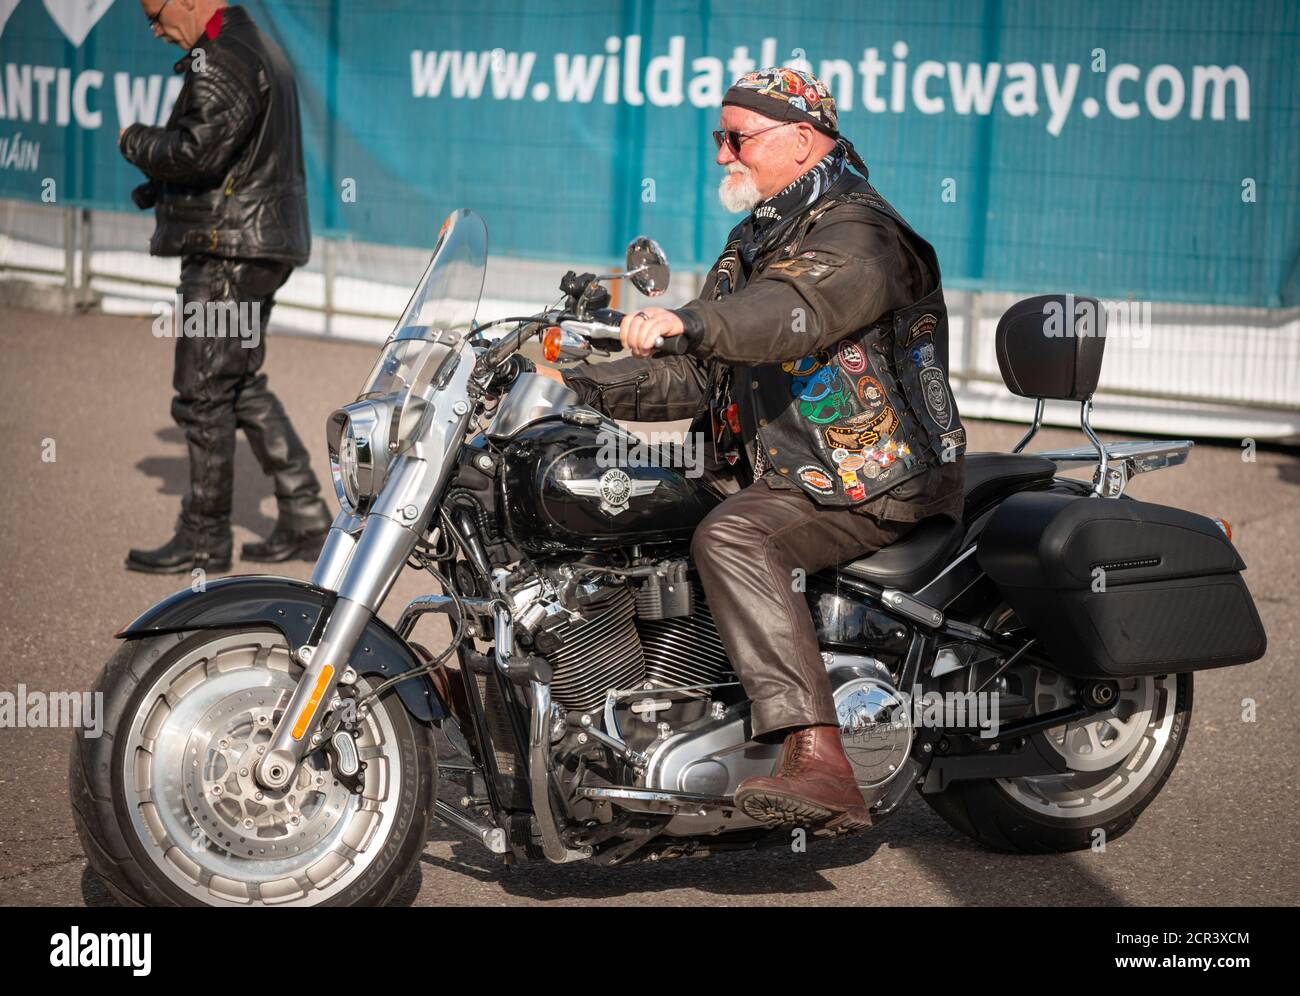 Harley Davidson Leather Jacket Fotos e Imágenes de stock - Alamy